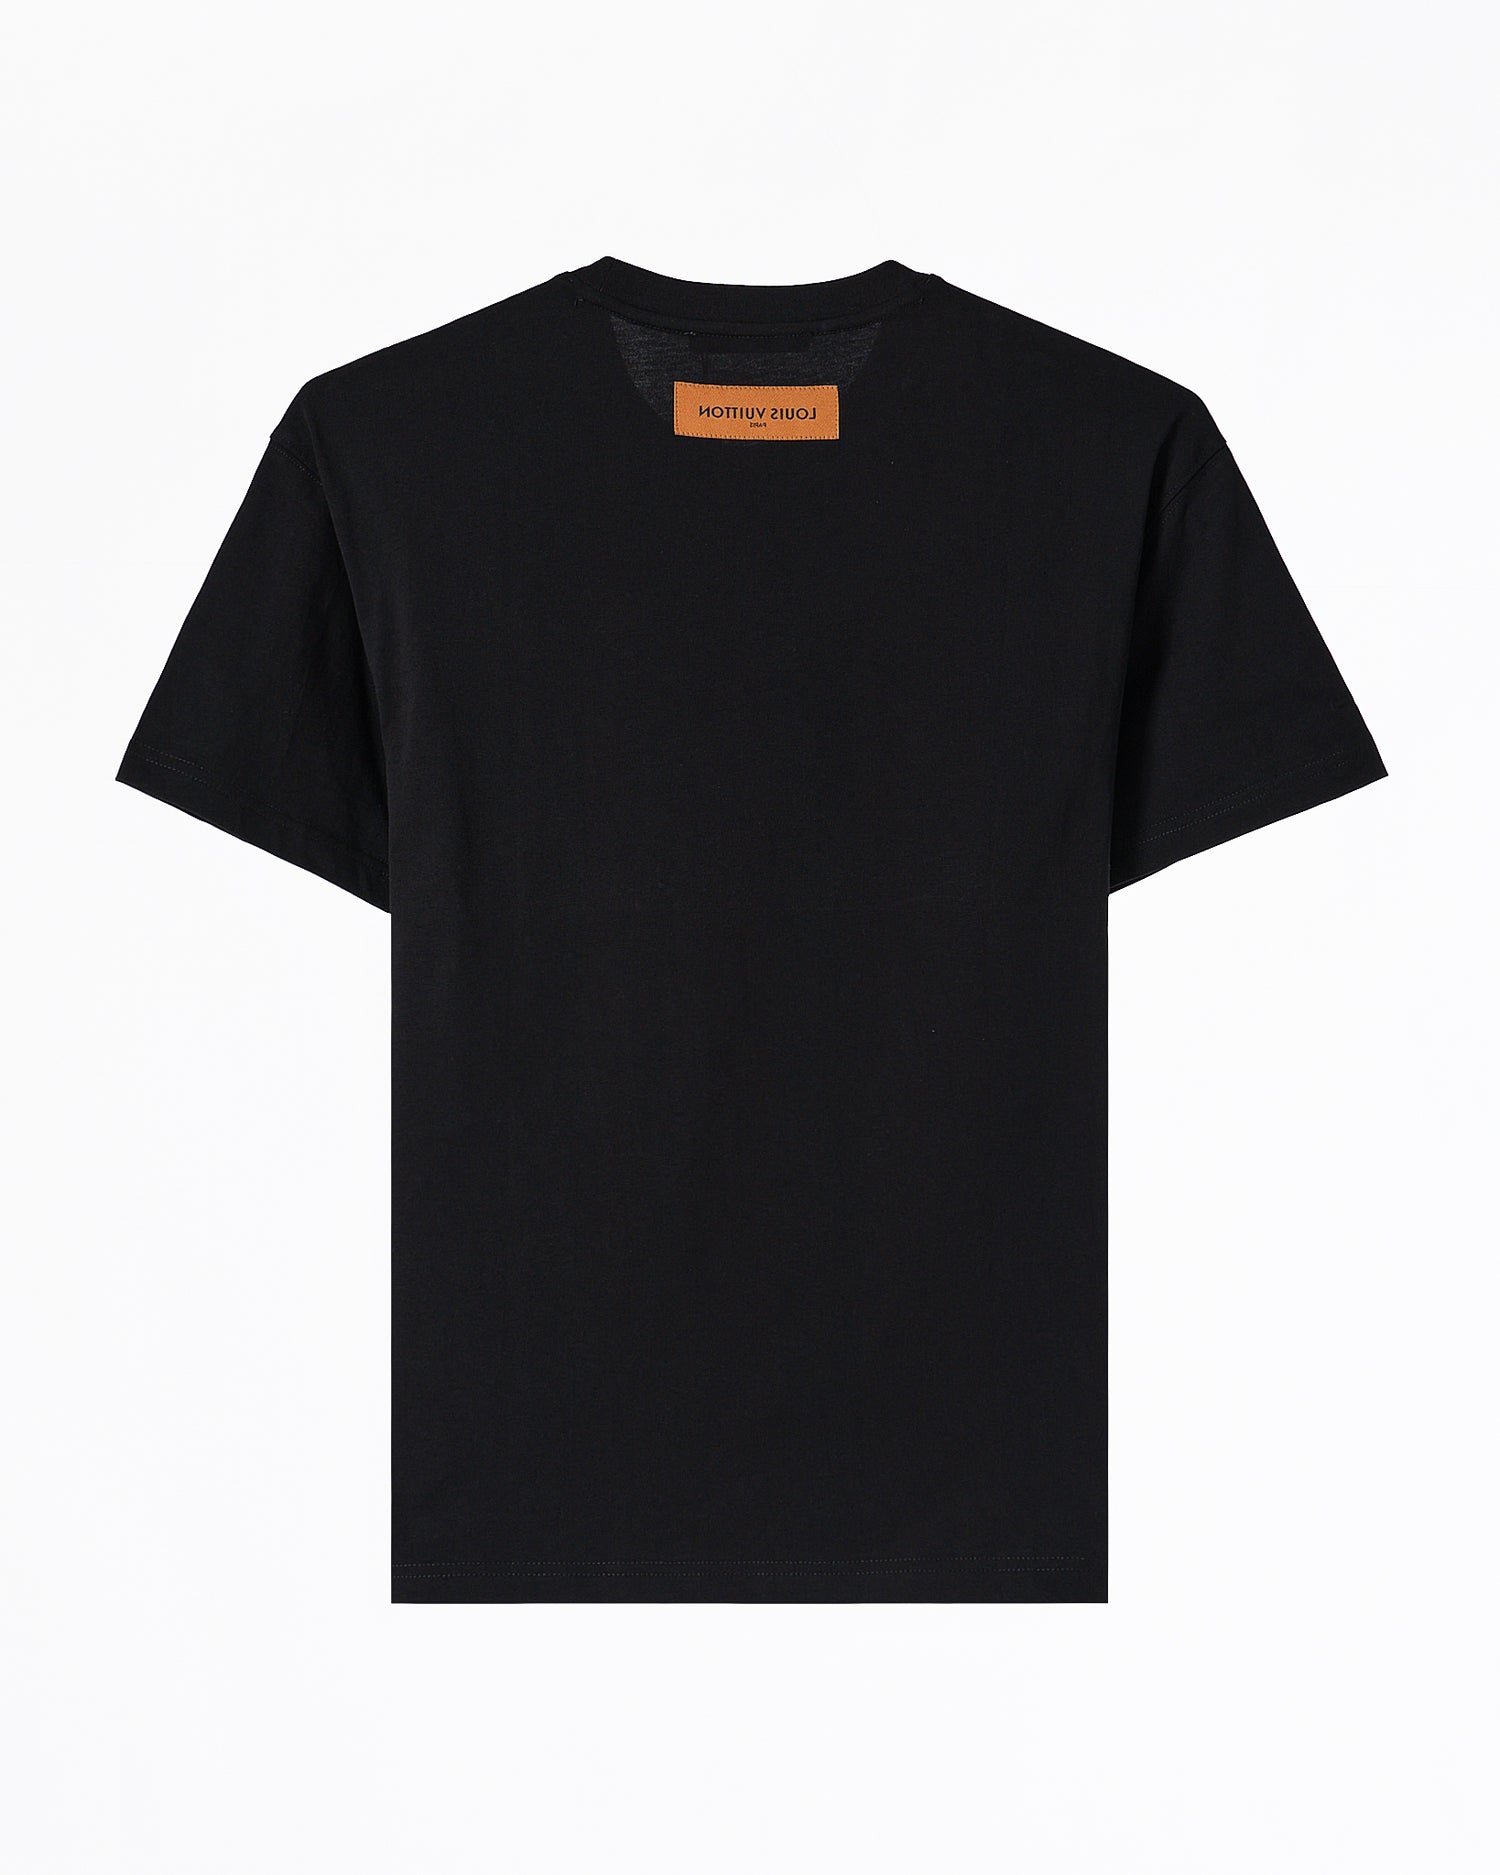 LV Eye Embroidered Men Black T-Shirt 55.90